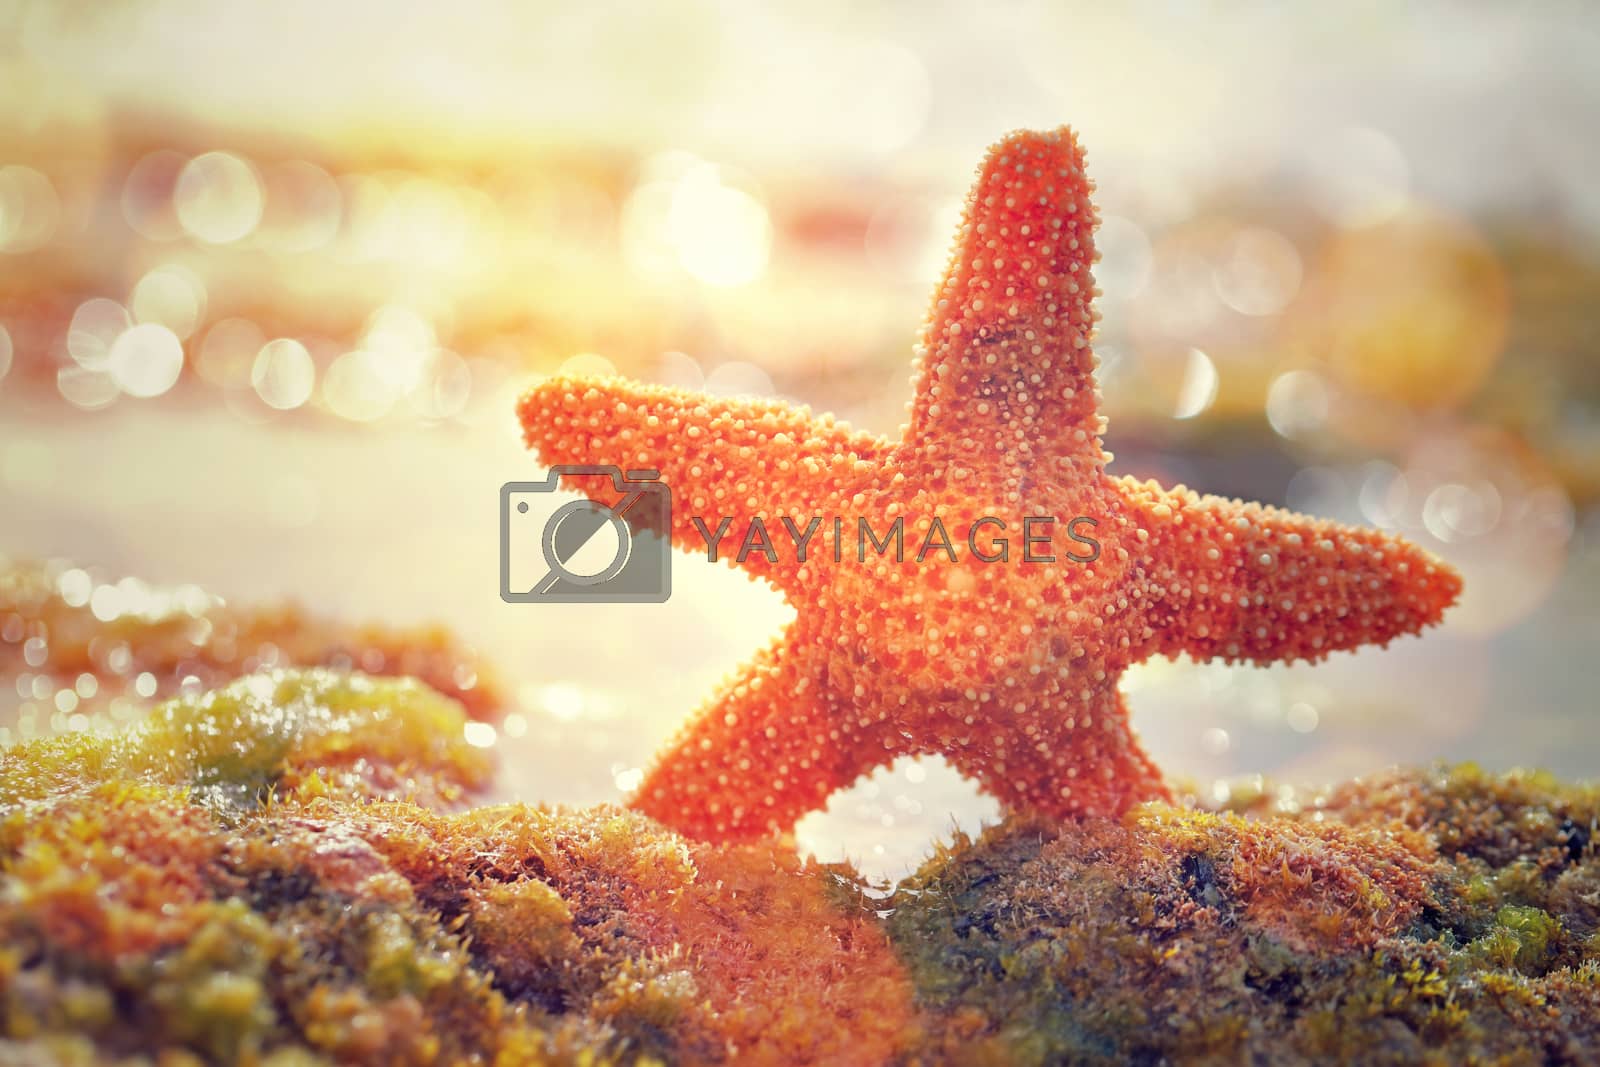 Royalty free image of Beautiful starfish by Anna_Omelchenko